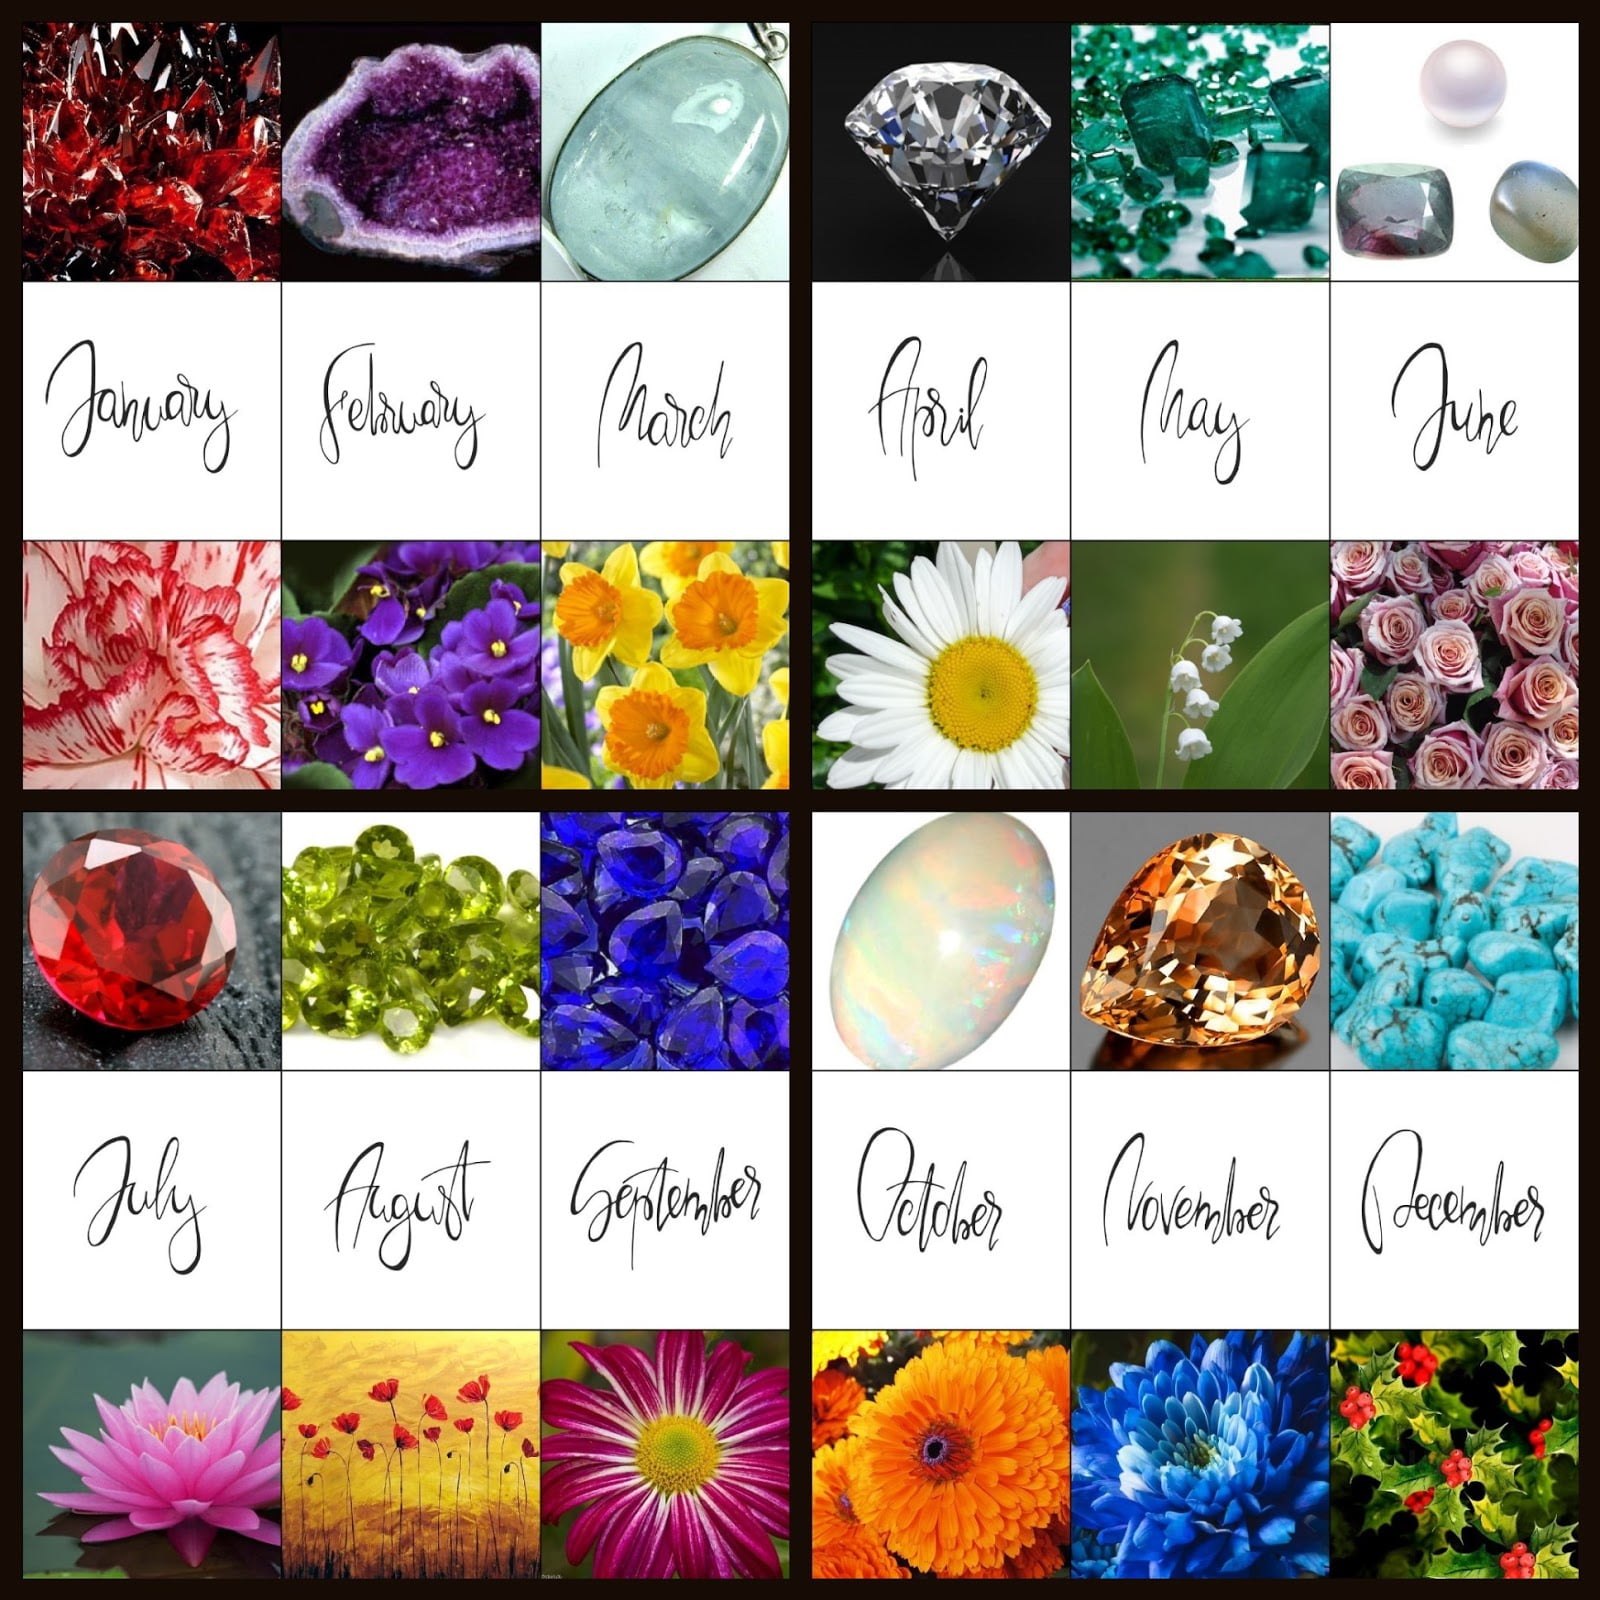 birthstone gems or flowers by month